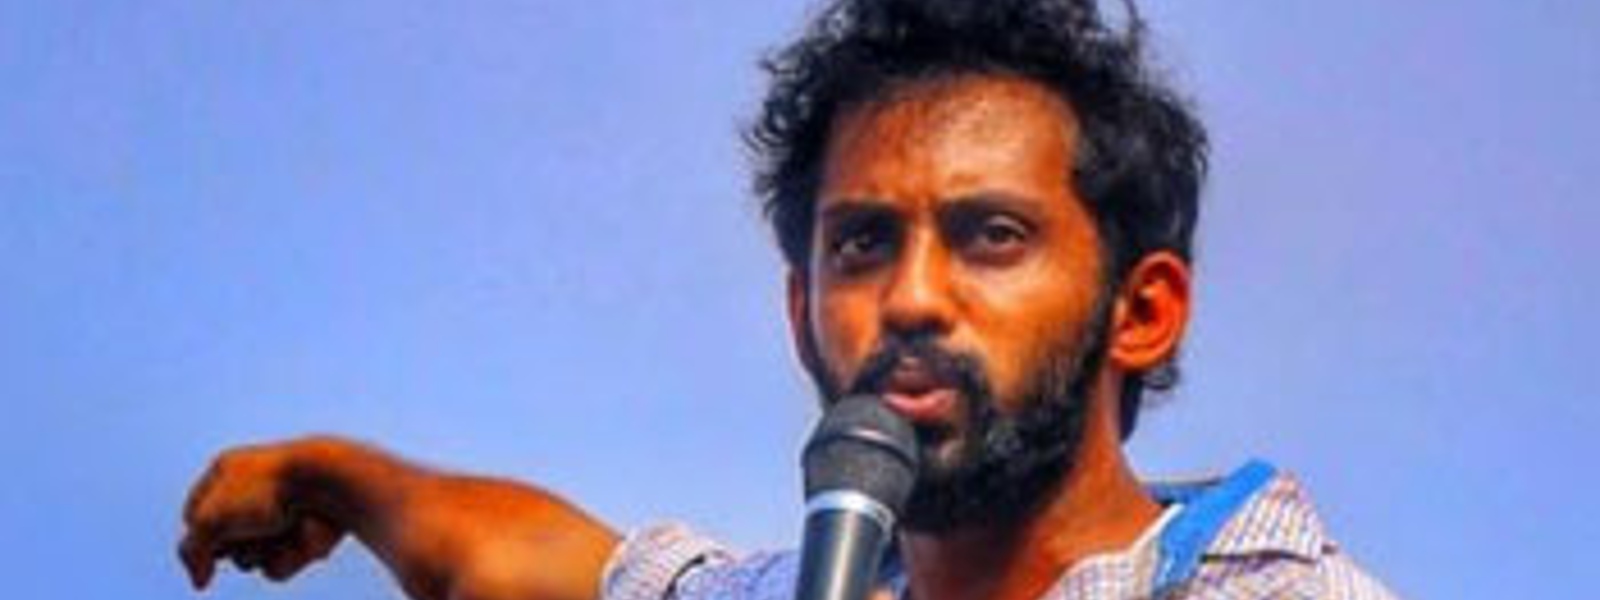 #AragalayaActivist Lahiru W. in court today (10)